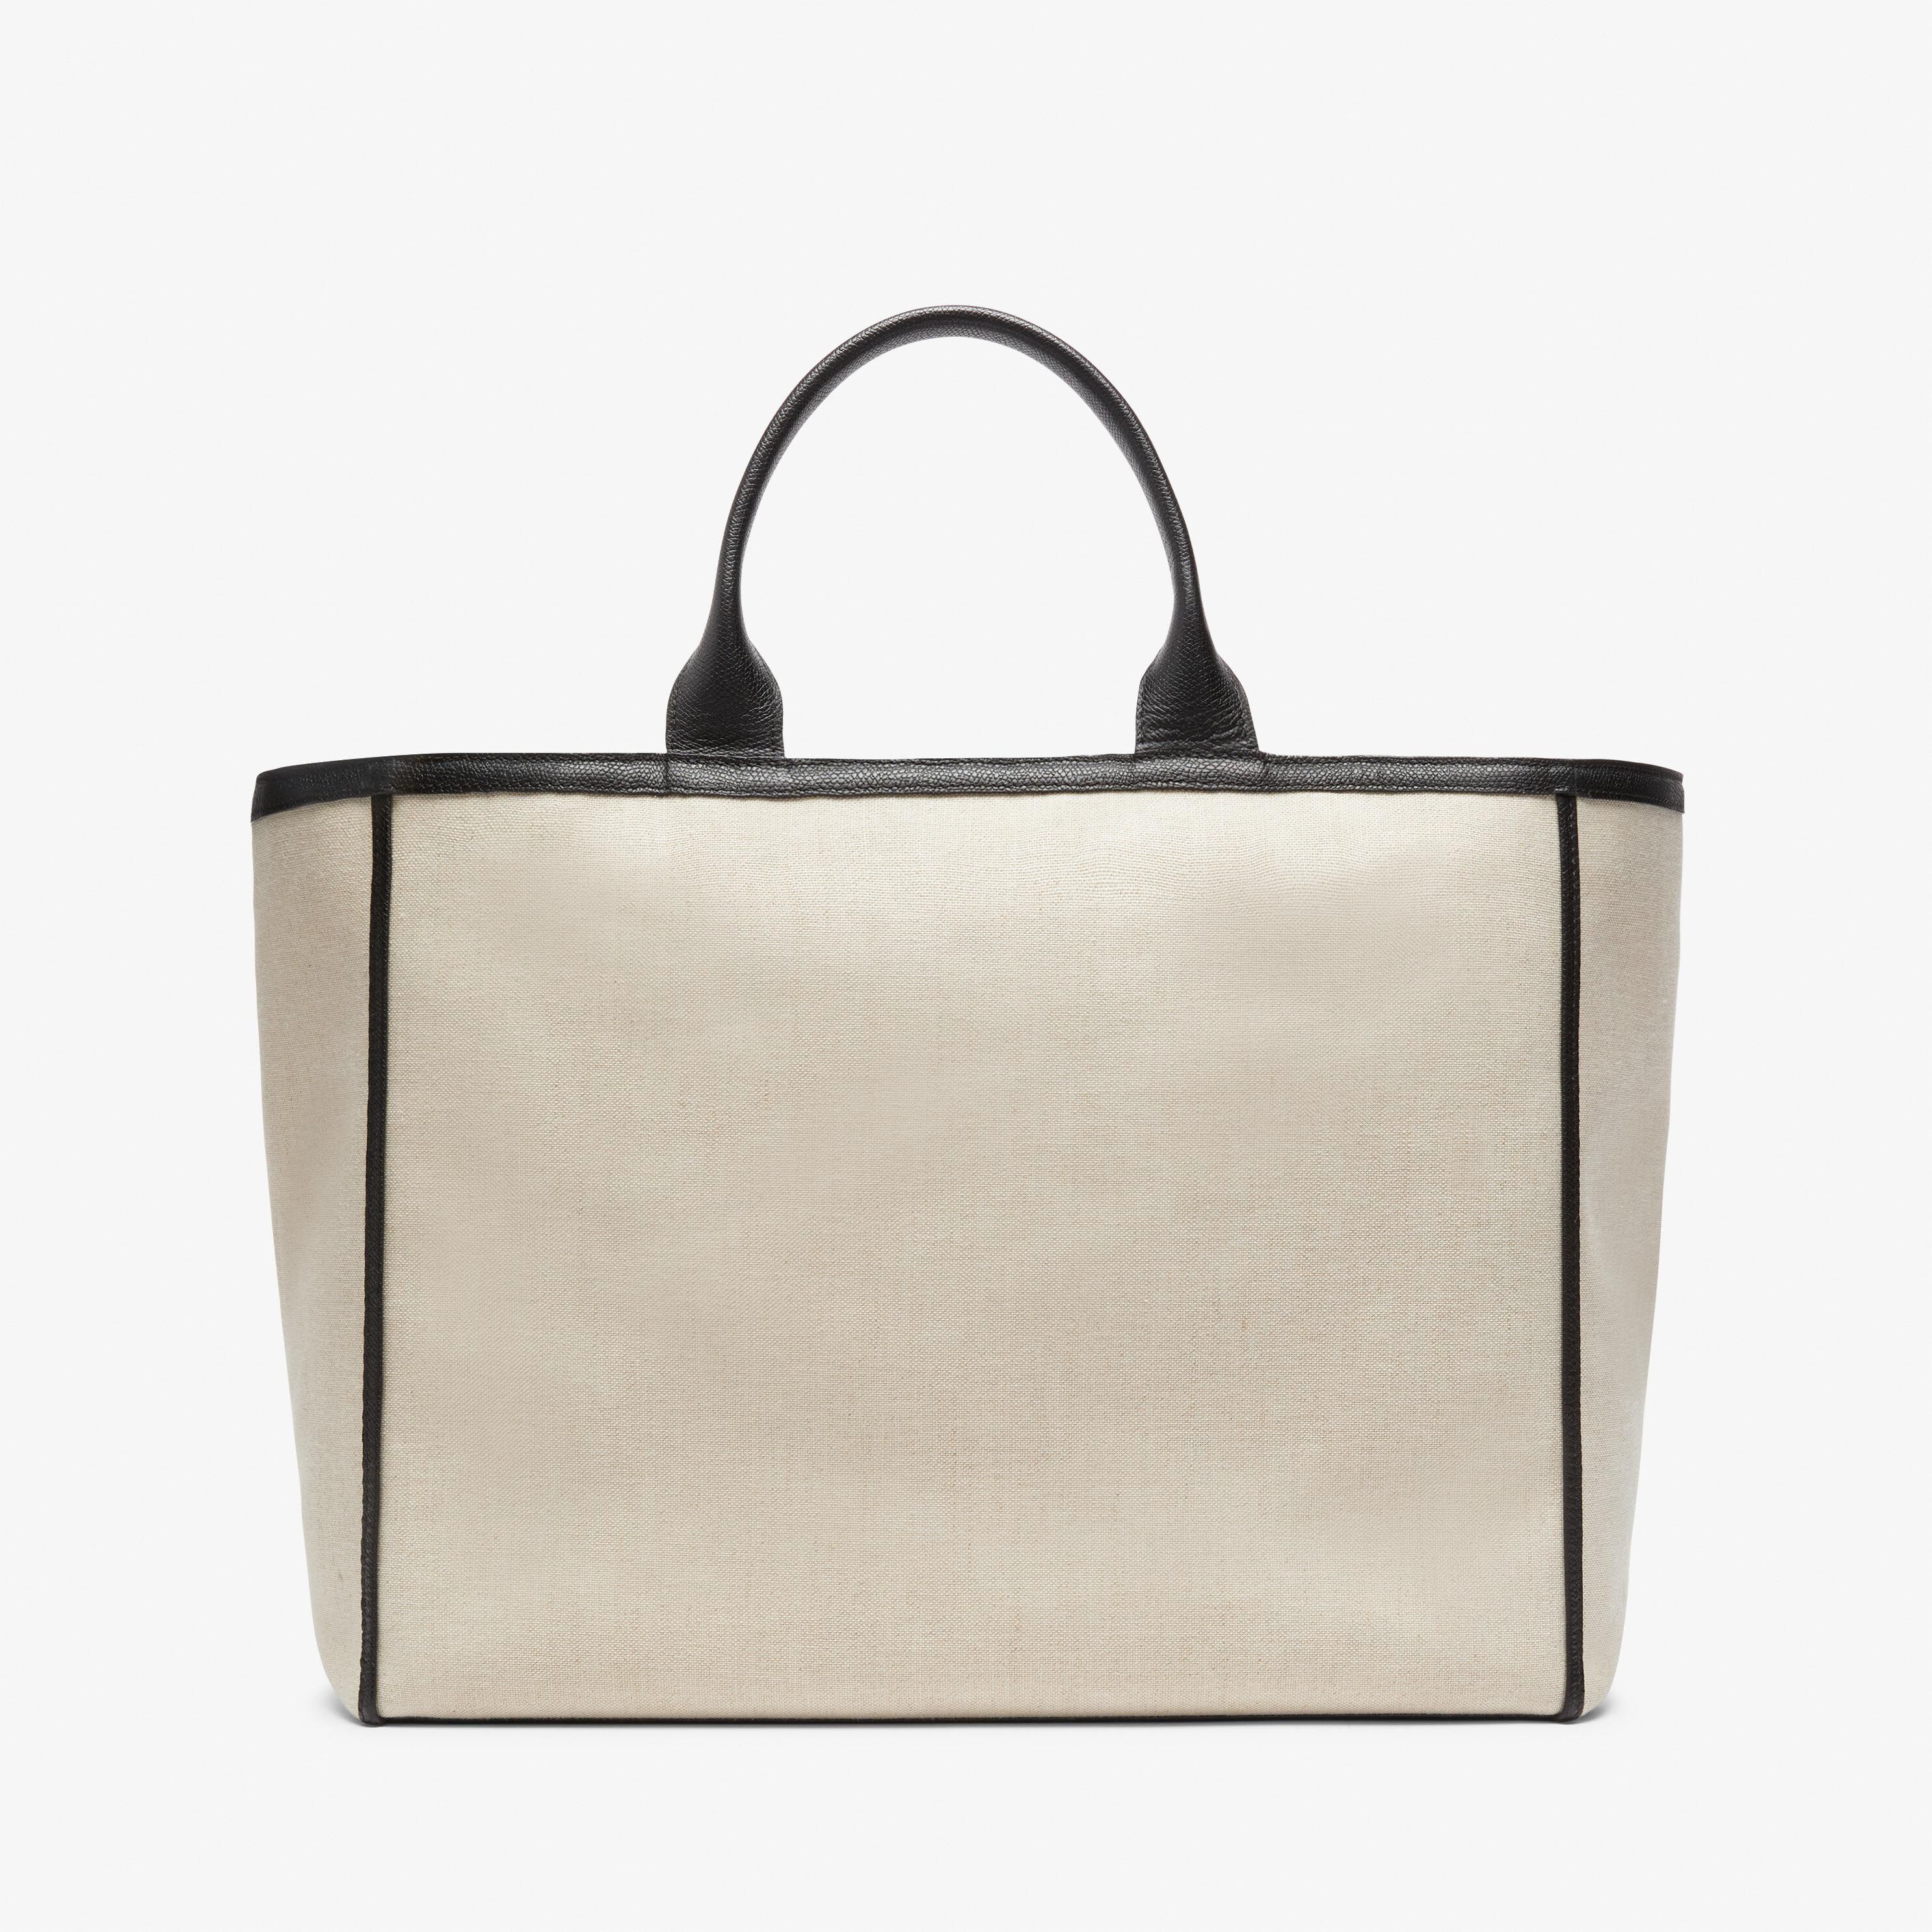 Shopping Large Bag Canvas - Sand Brown/Black